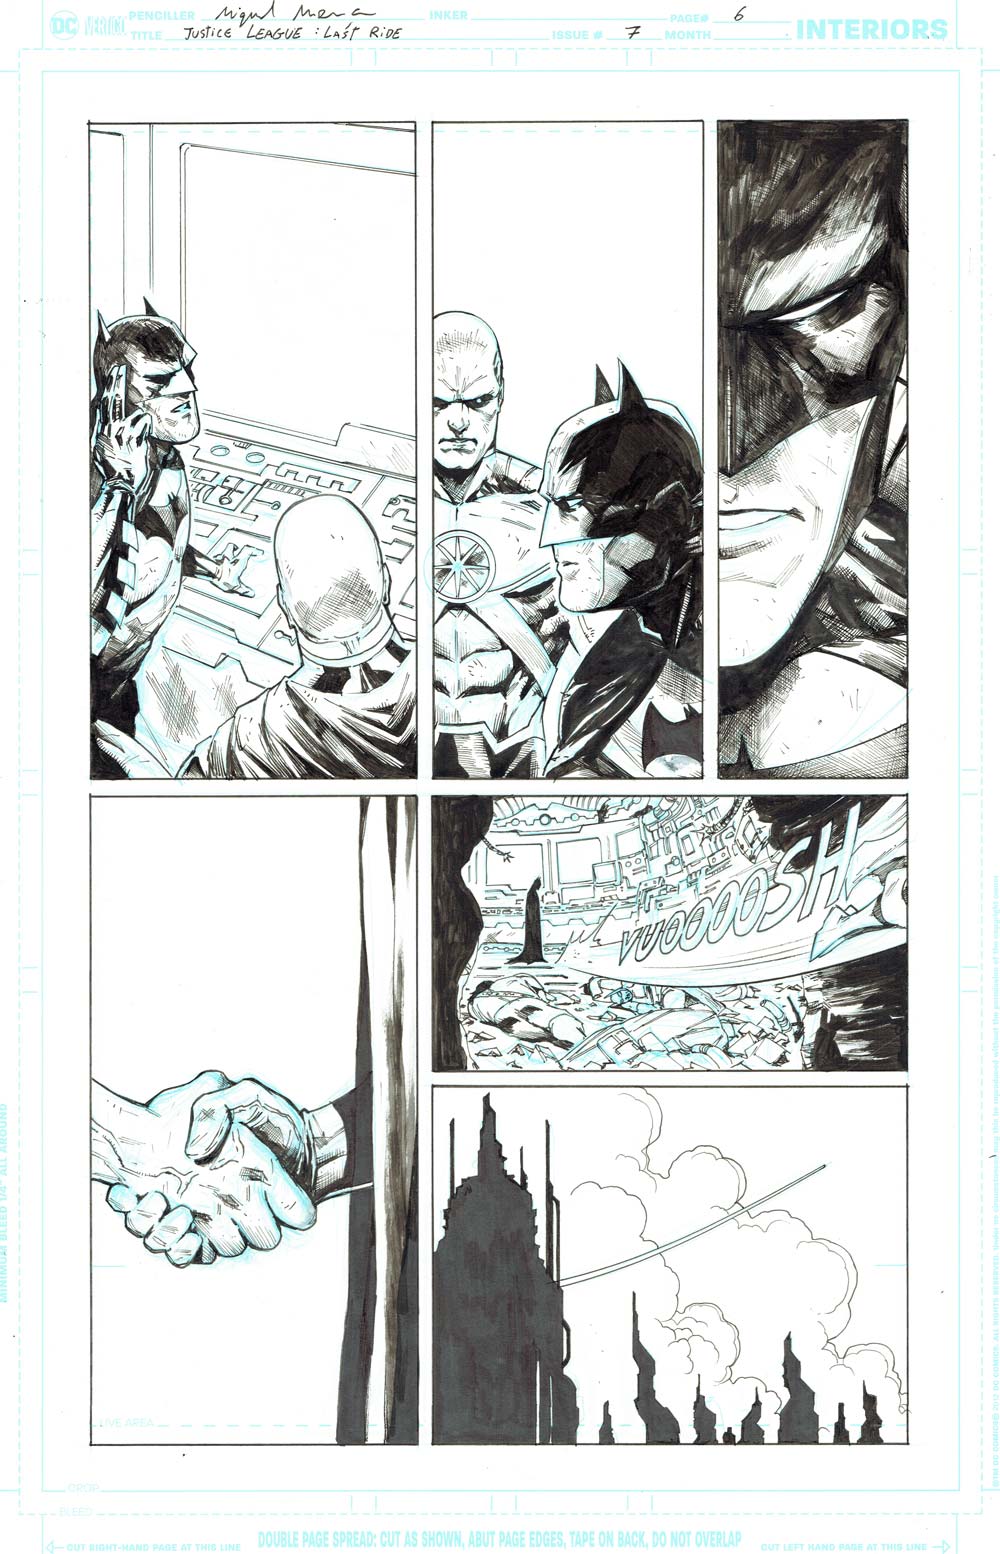 Justice League - Last Ride #4 (Page 6)